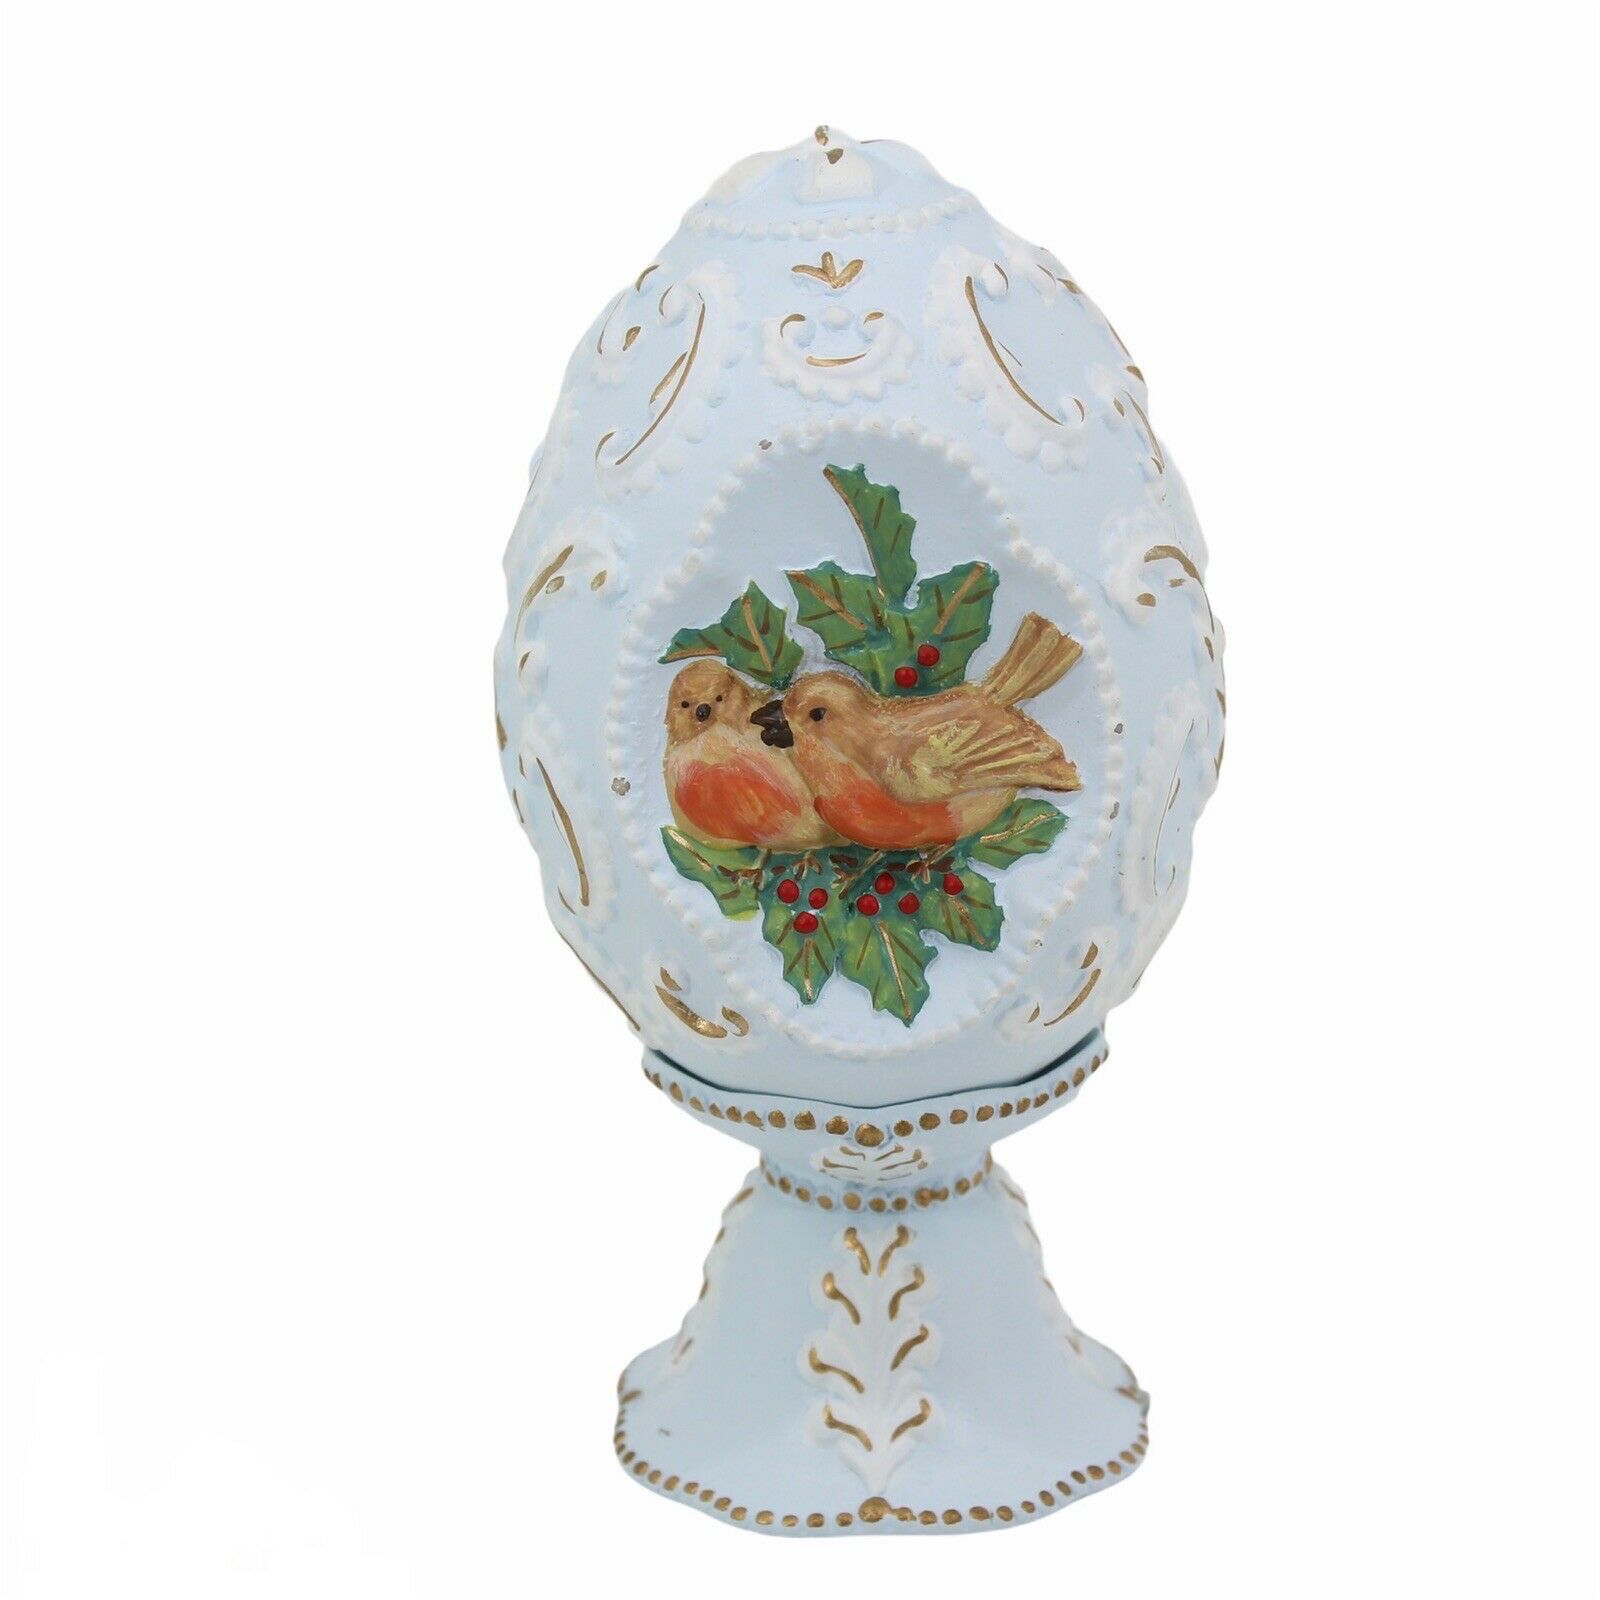 Avon Seasons Treasures Collection “Birds Of Joy” Egg